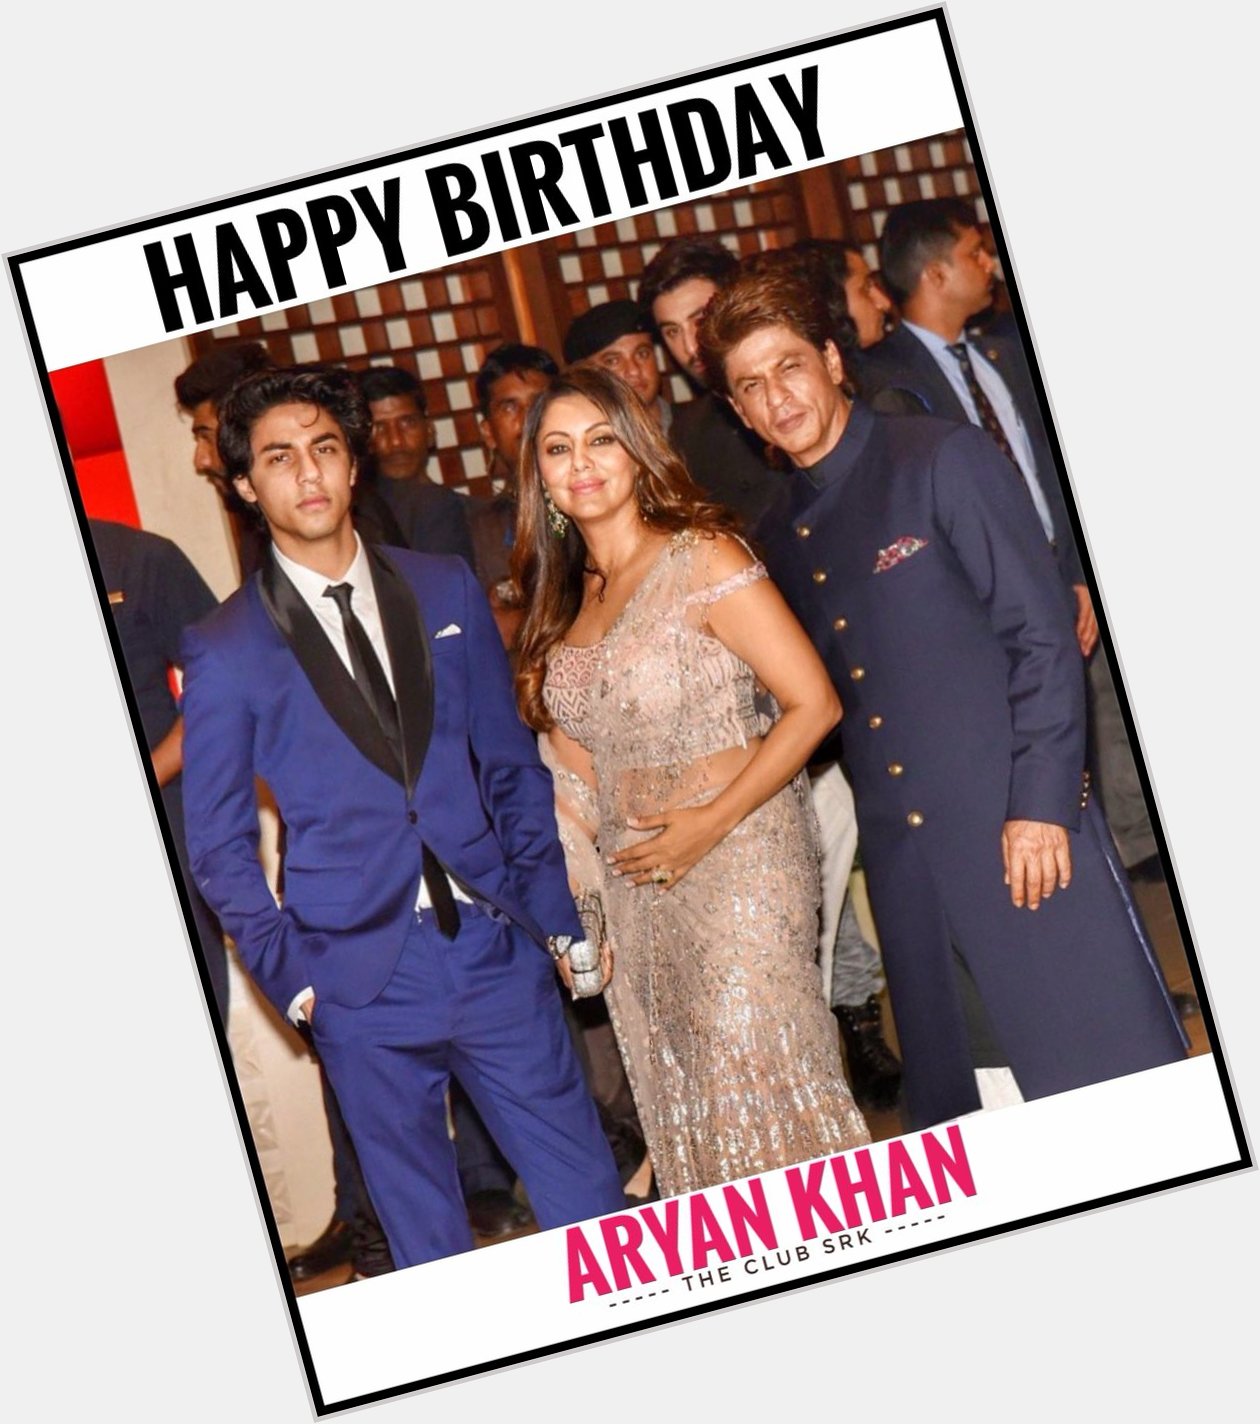 \The Club SRK\ wishing Aryan Khan a very Happy Birthday    